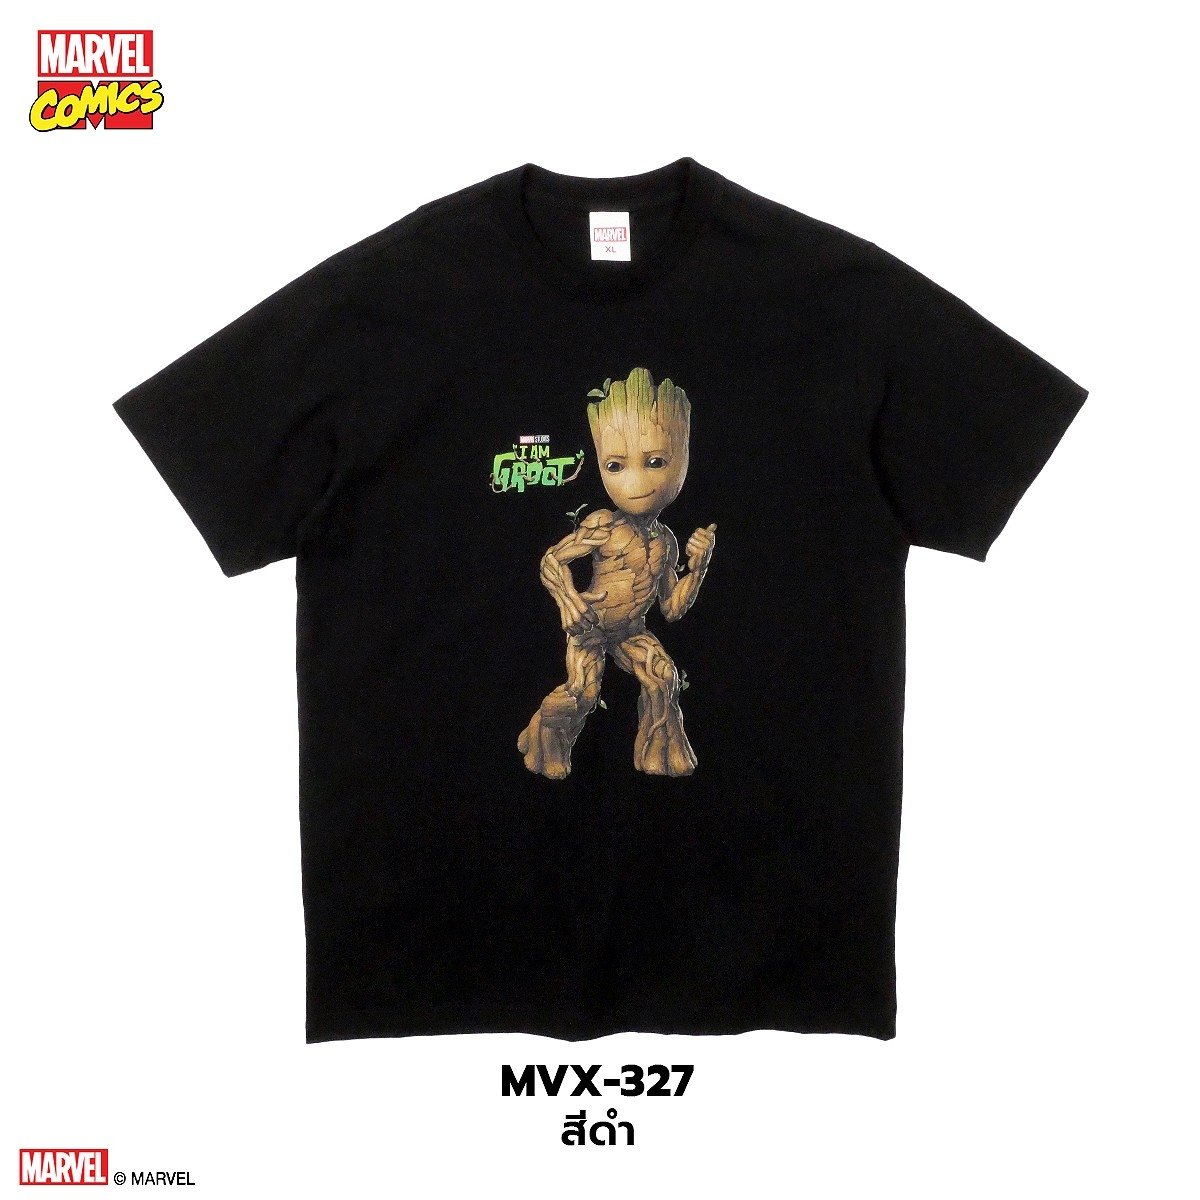 GROOT Marvel Comics T-shirt (MVX-327)